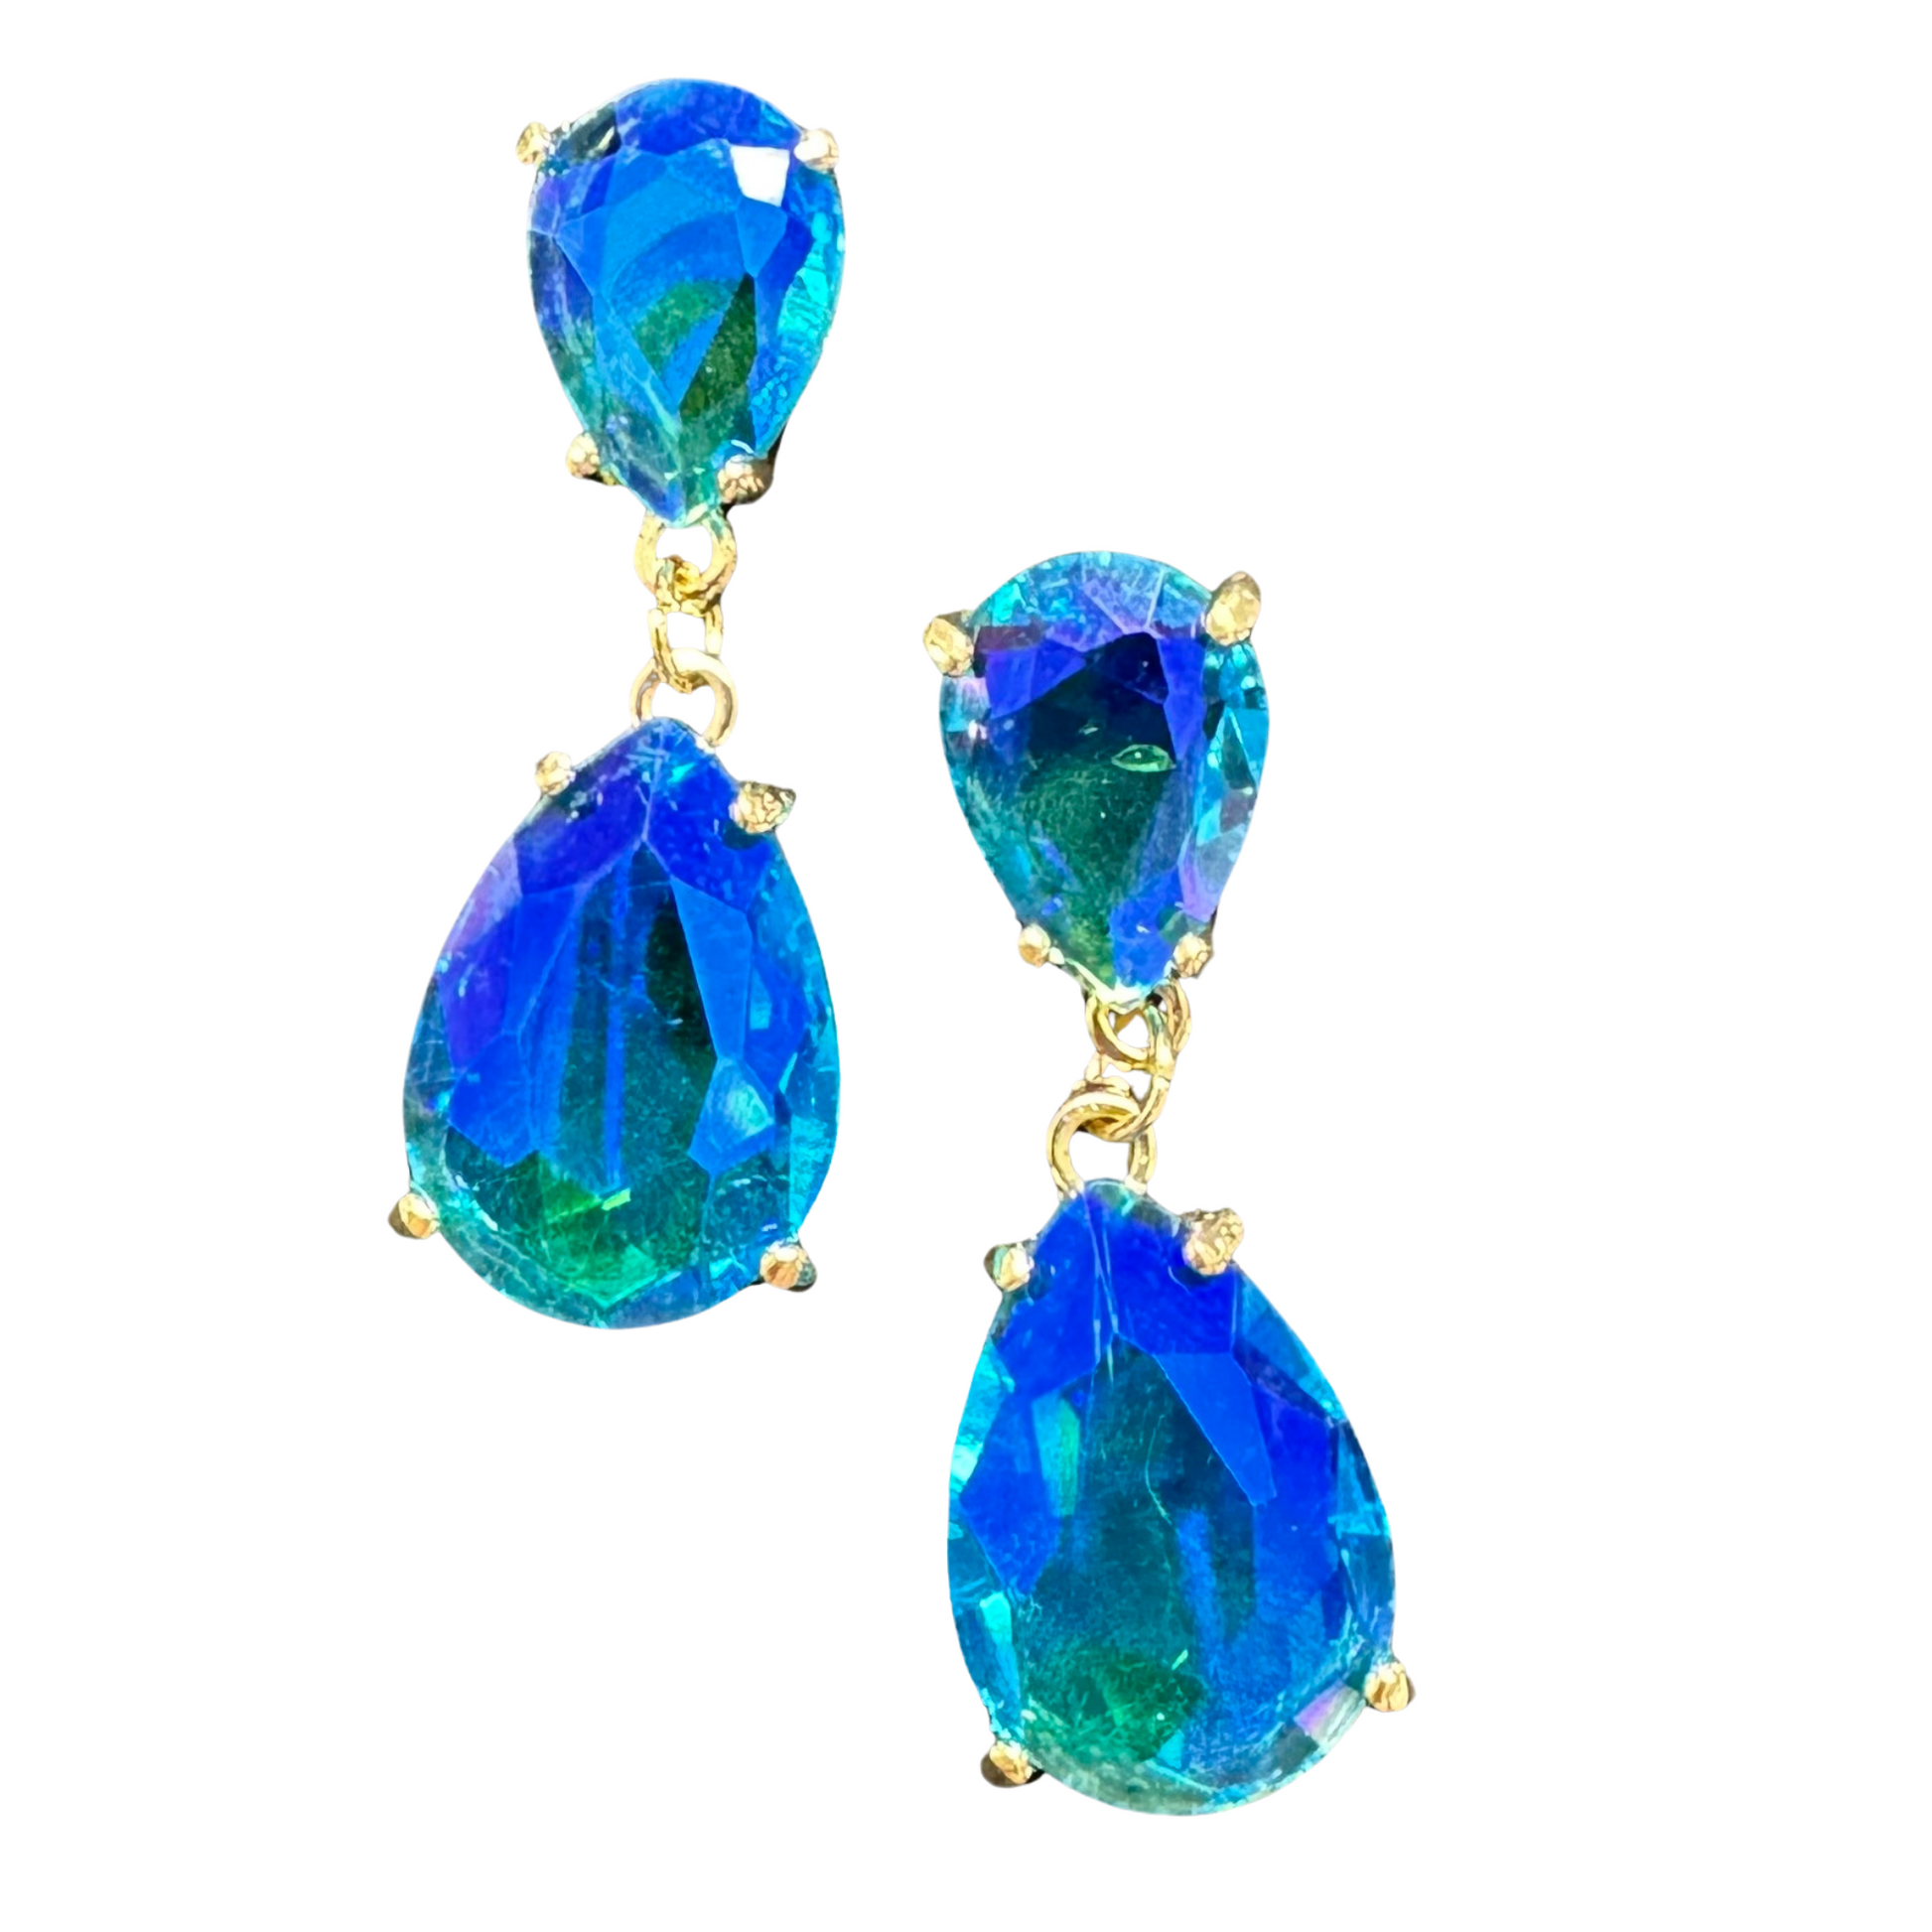 Colored Iridescent dangle earrings in turquiose